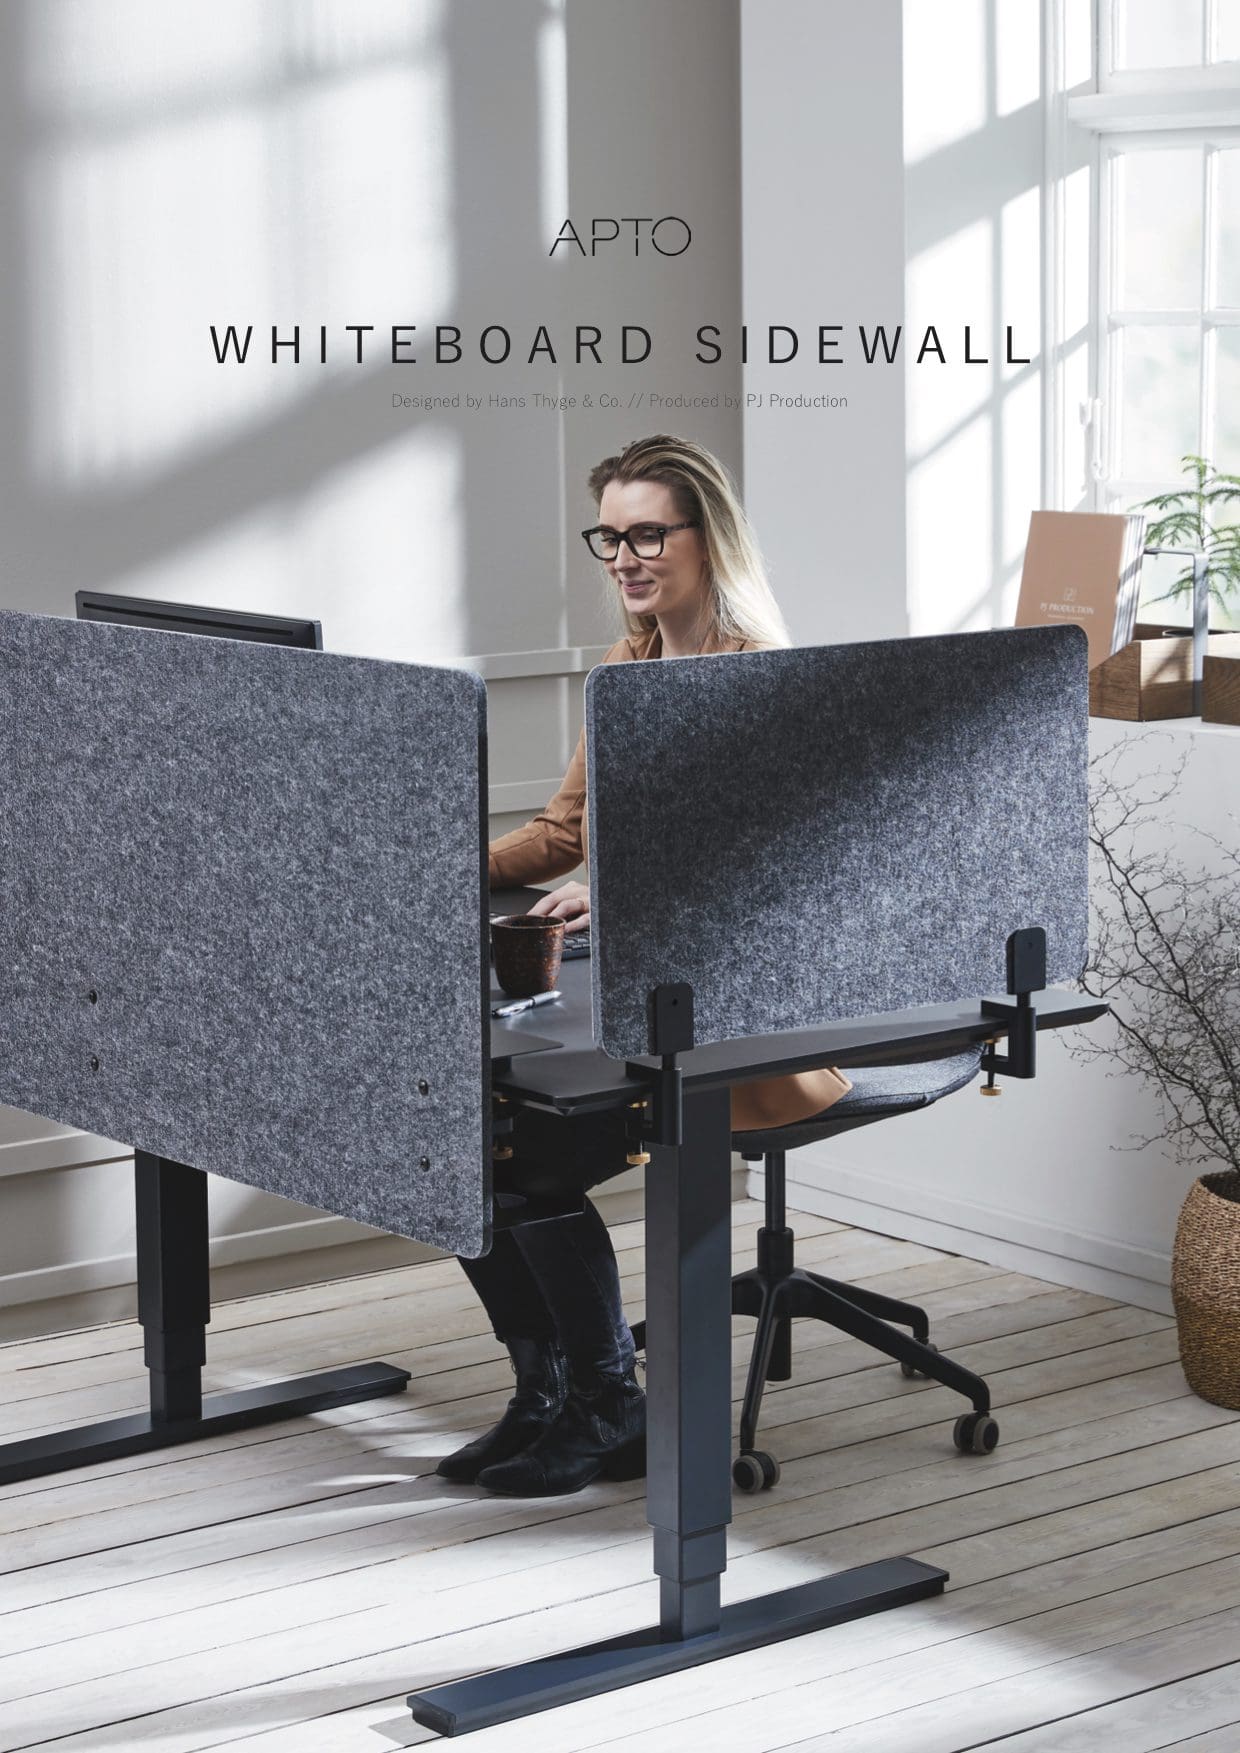 Product sheet Whiteboard sidewall ENG